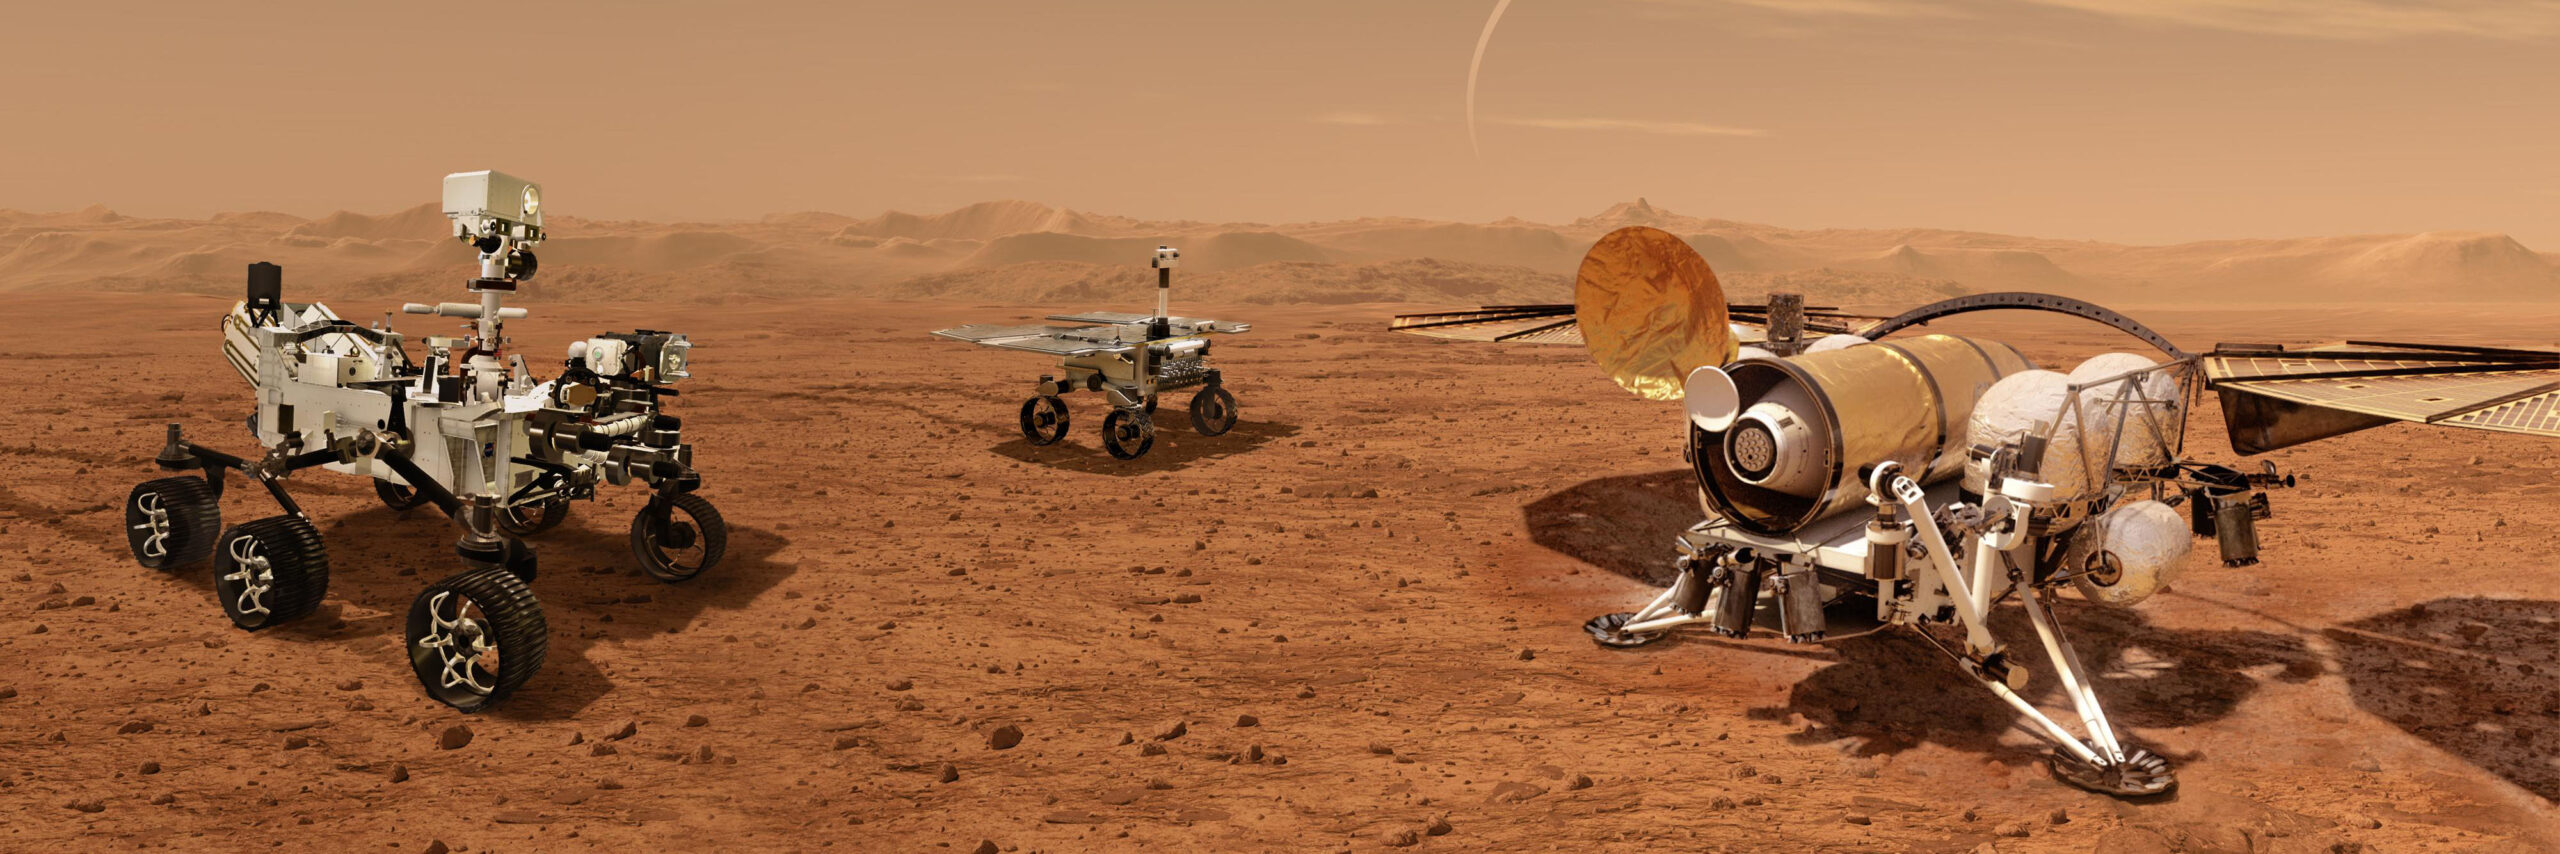 NASA exploration vehicles on the surface of Mars